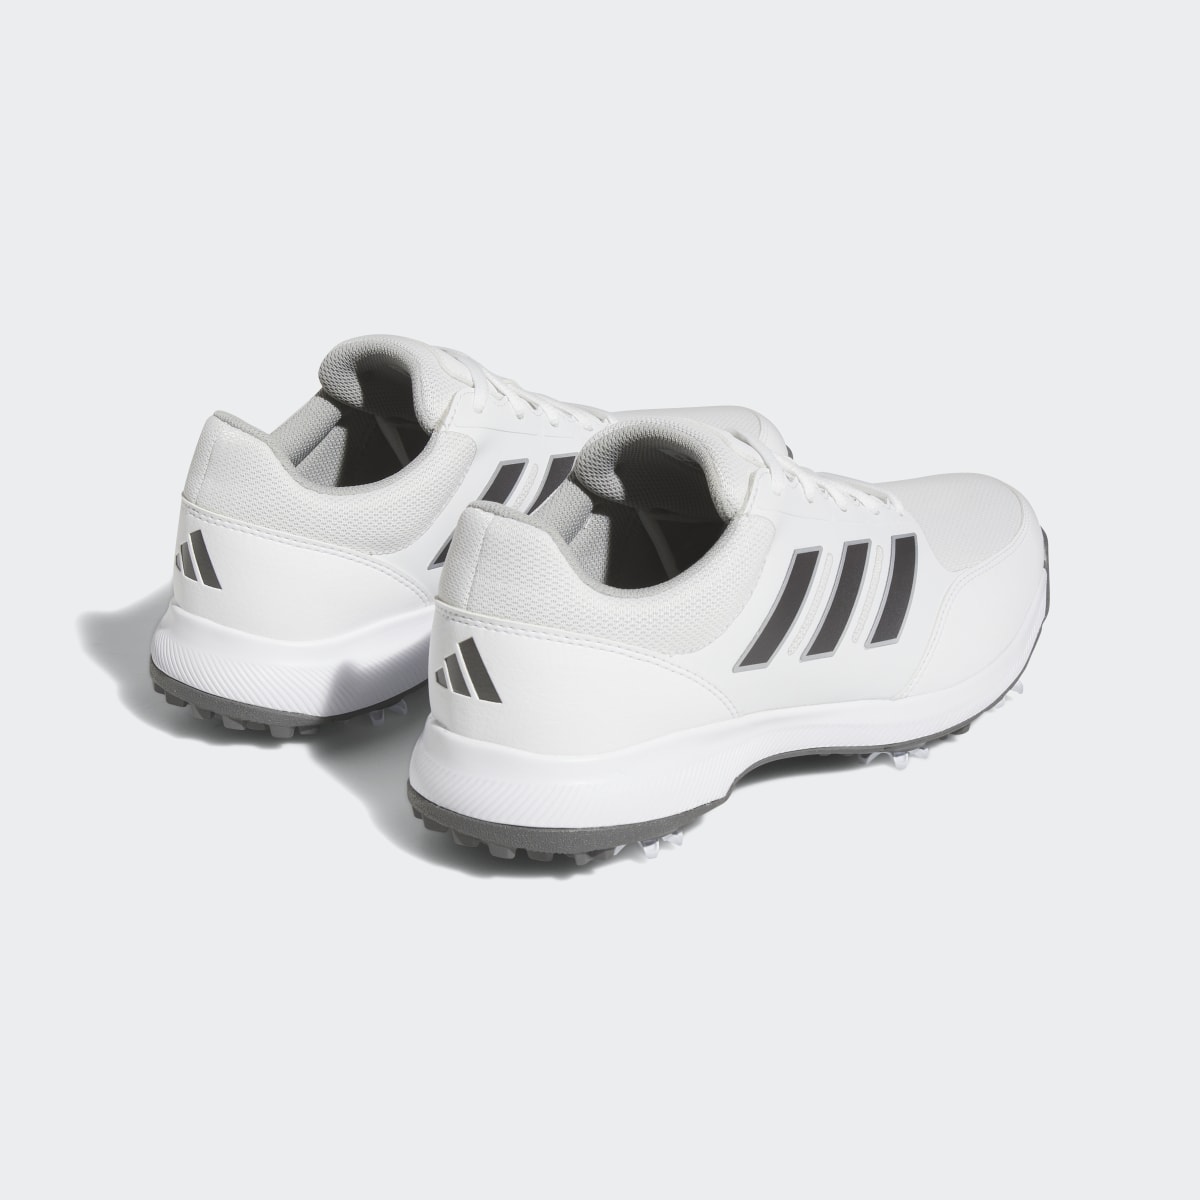 Adidas Tech Response 3.0 Wide Golf Shoes. 6